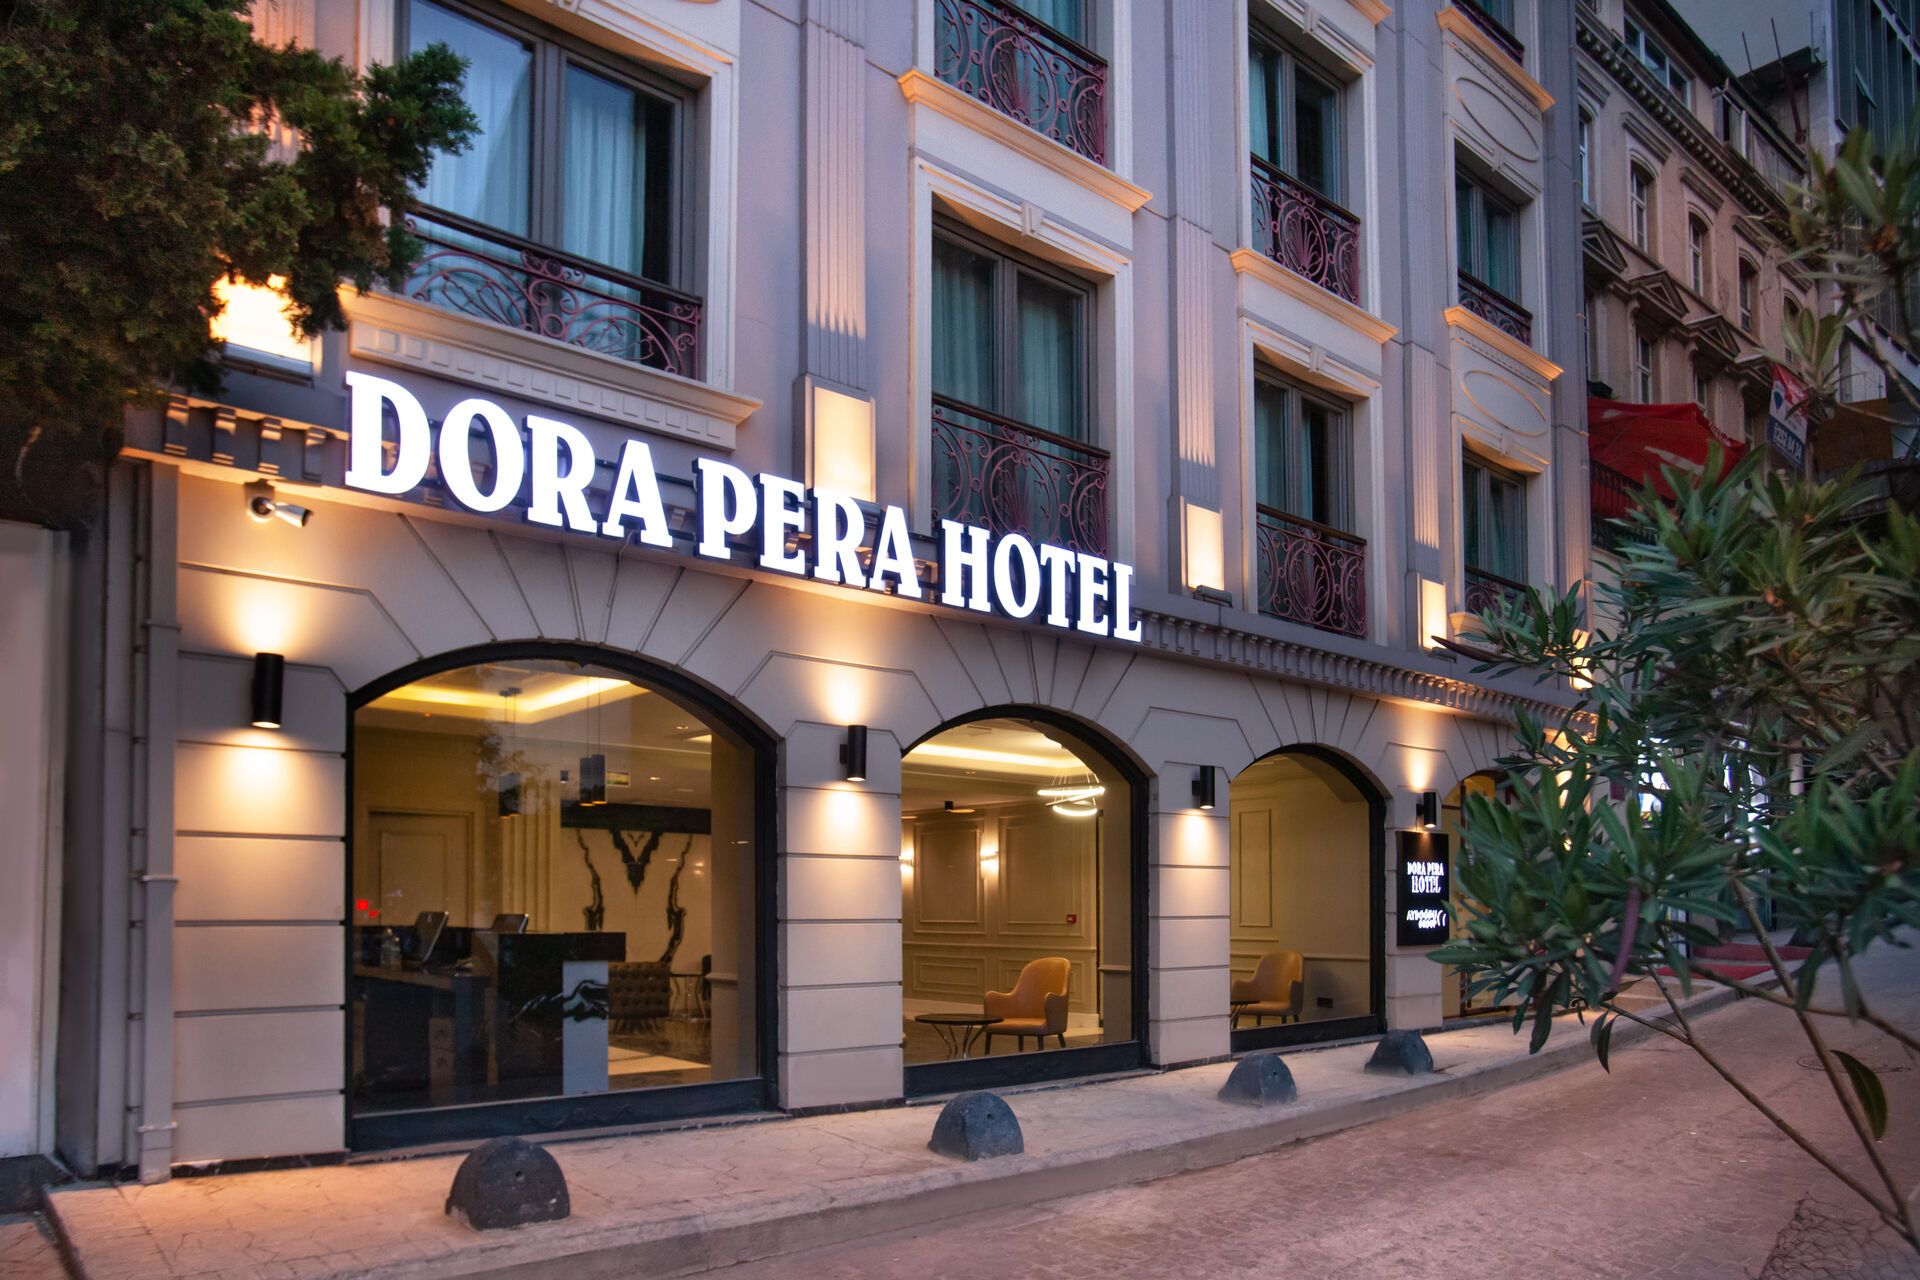 Hôtel Dora Pera 4* pas cher photo 1